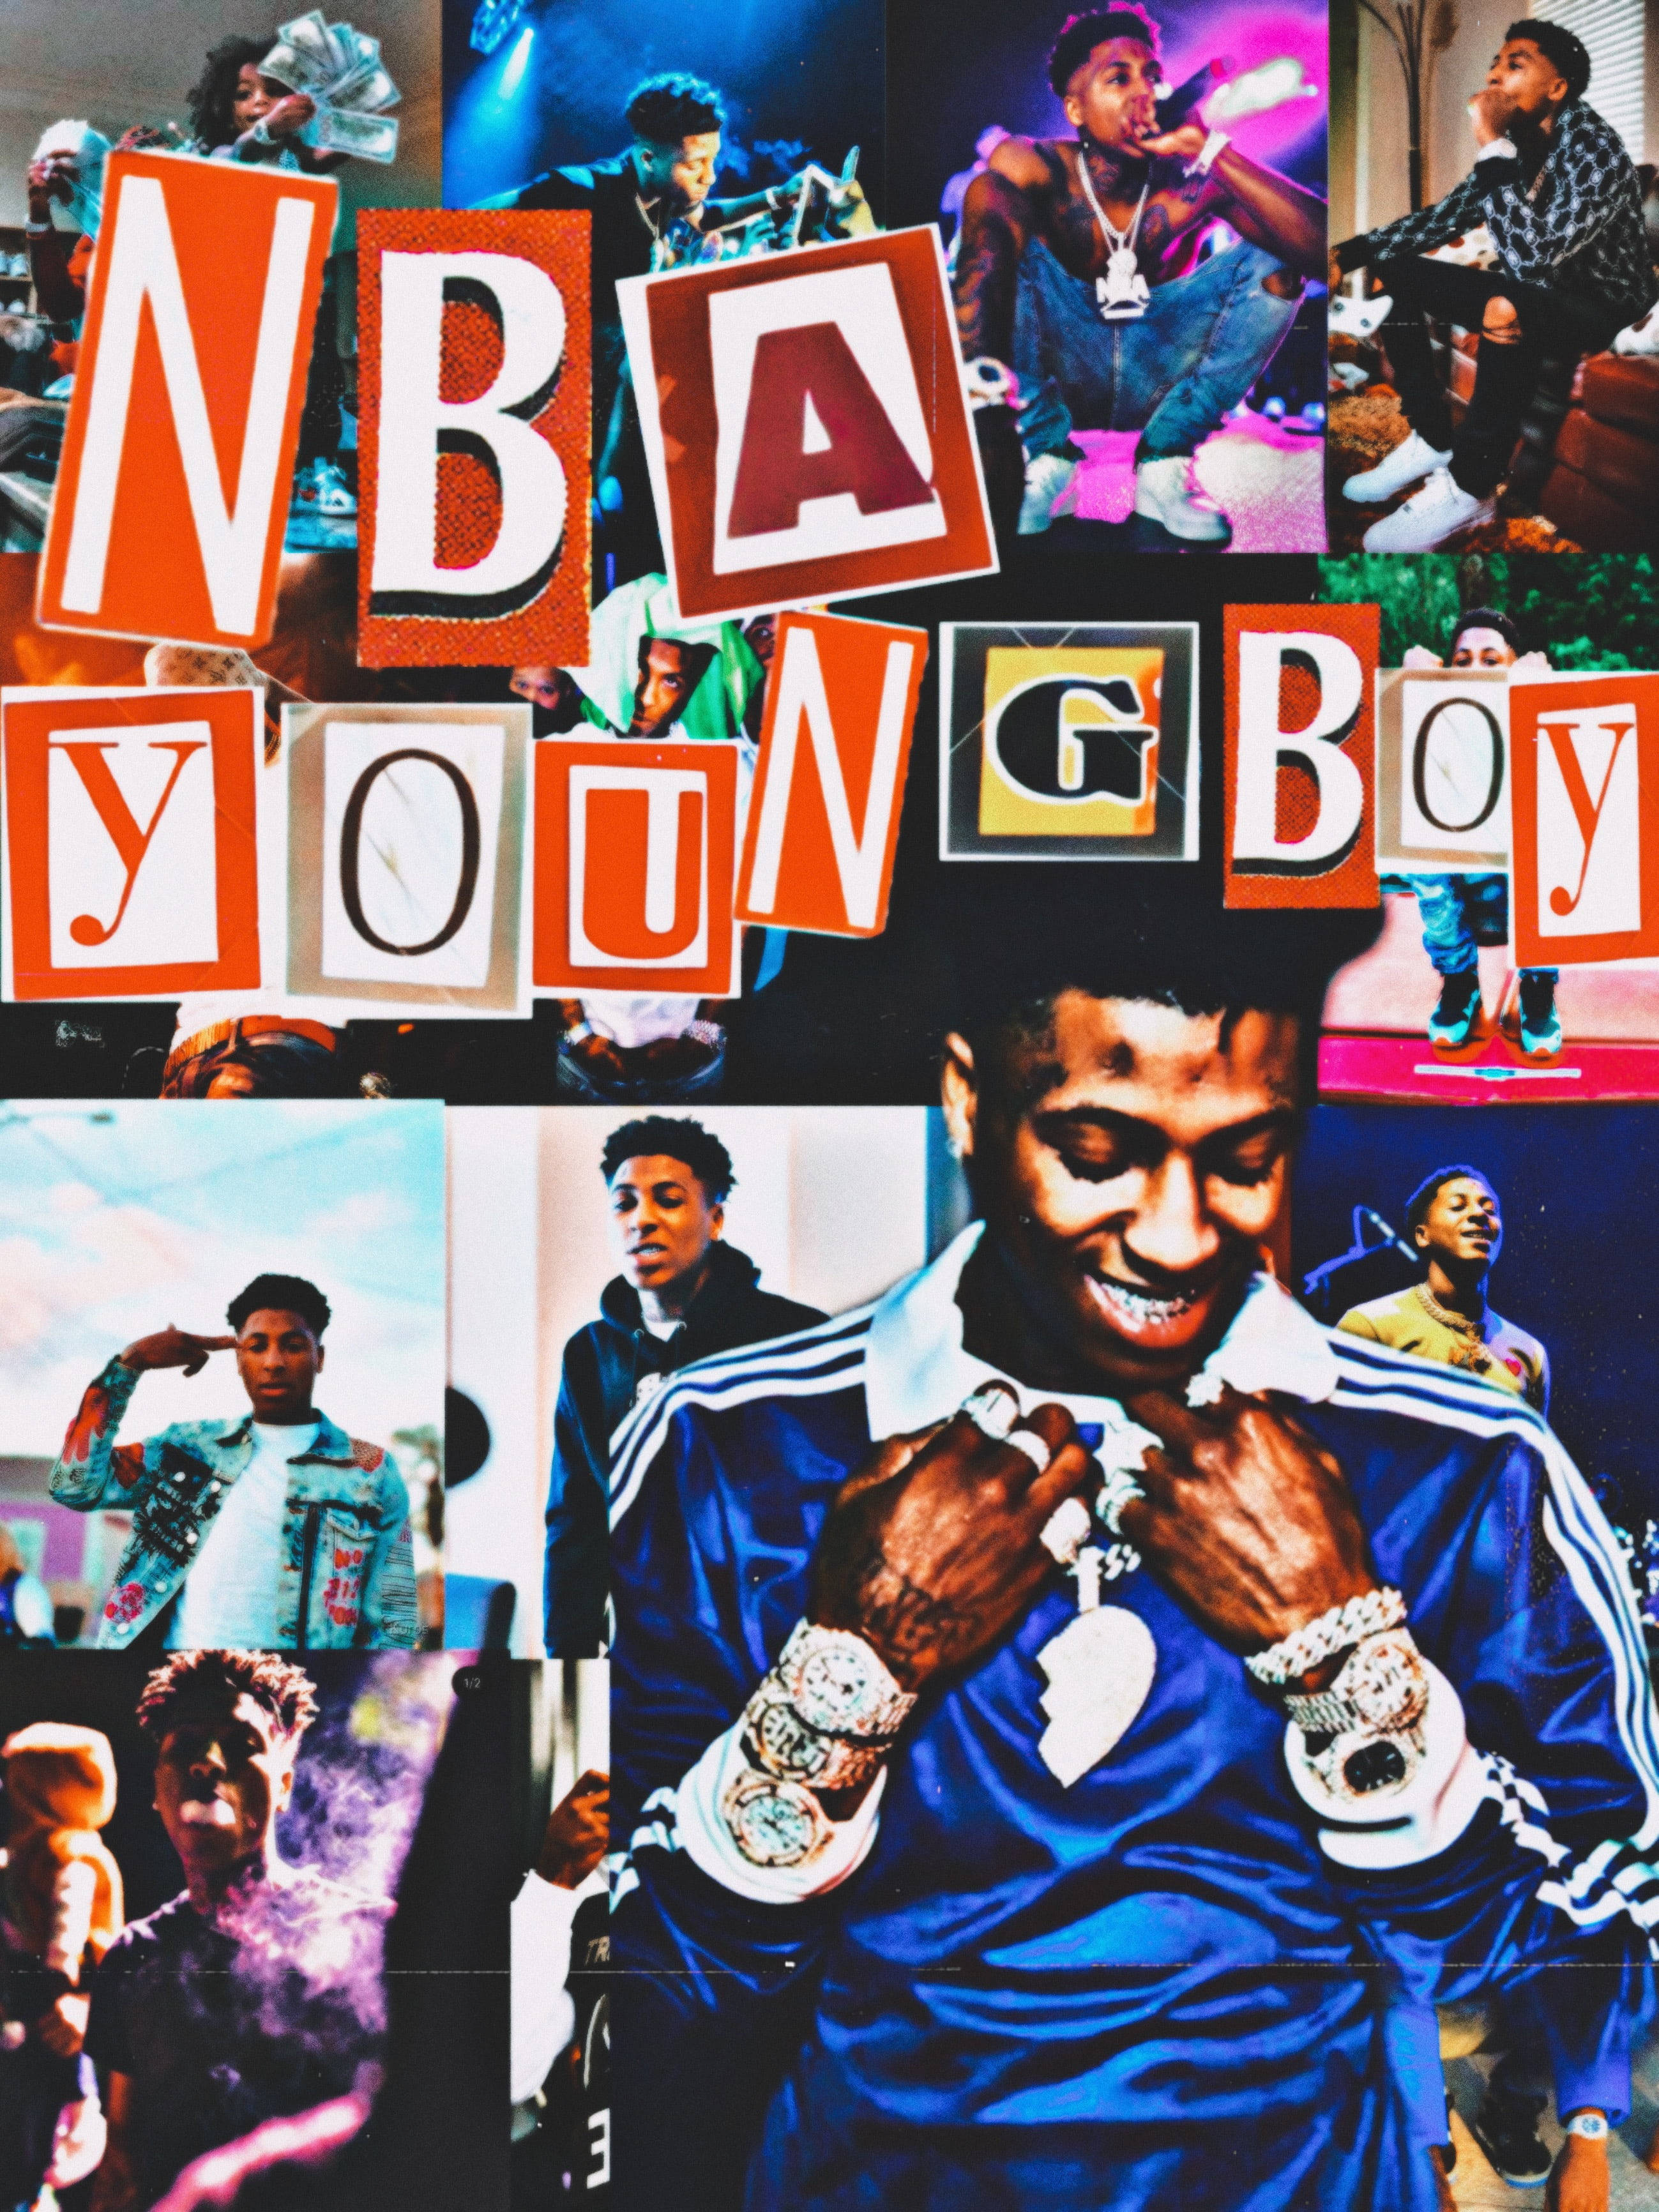 Nba Youngboy Logo Poster Design Wallpaper